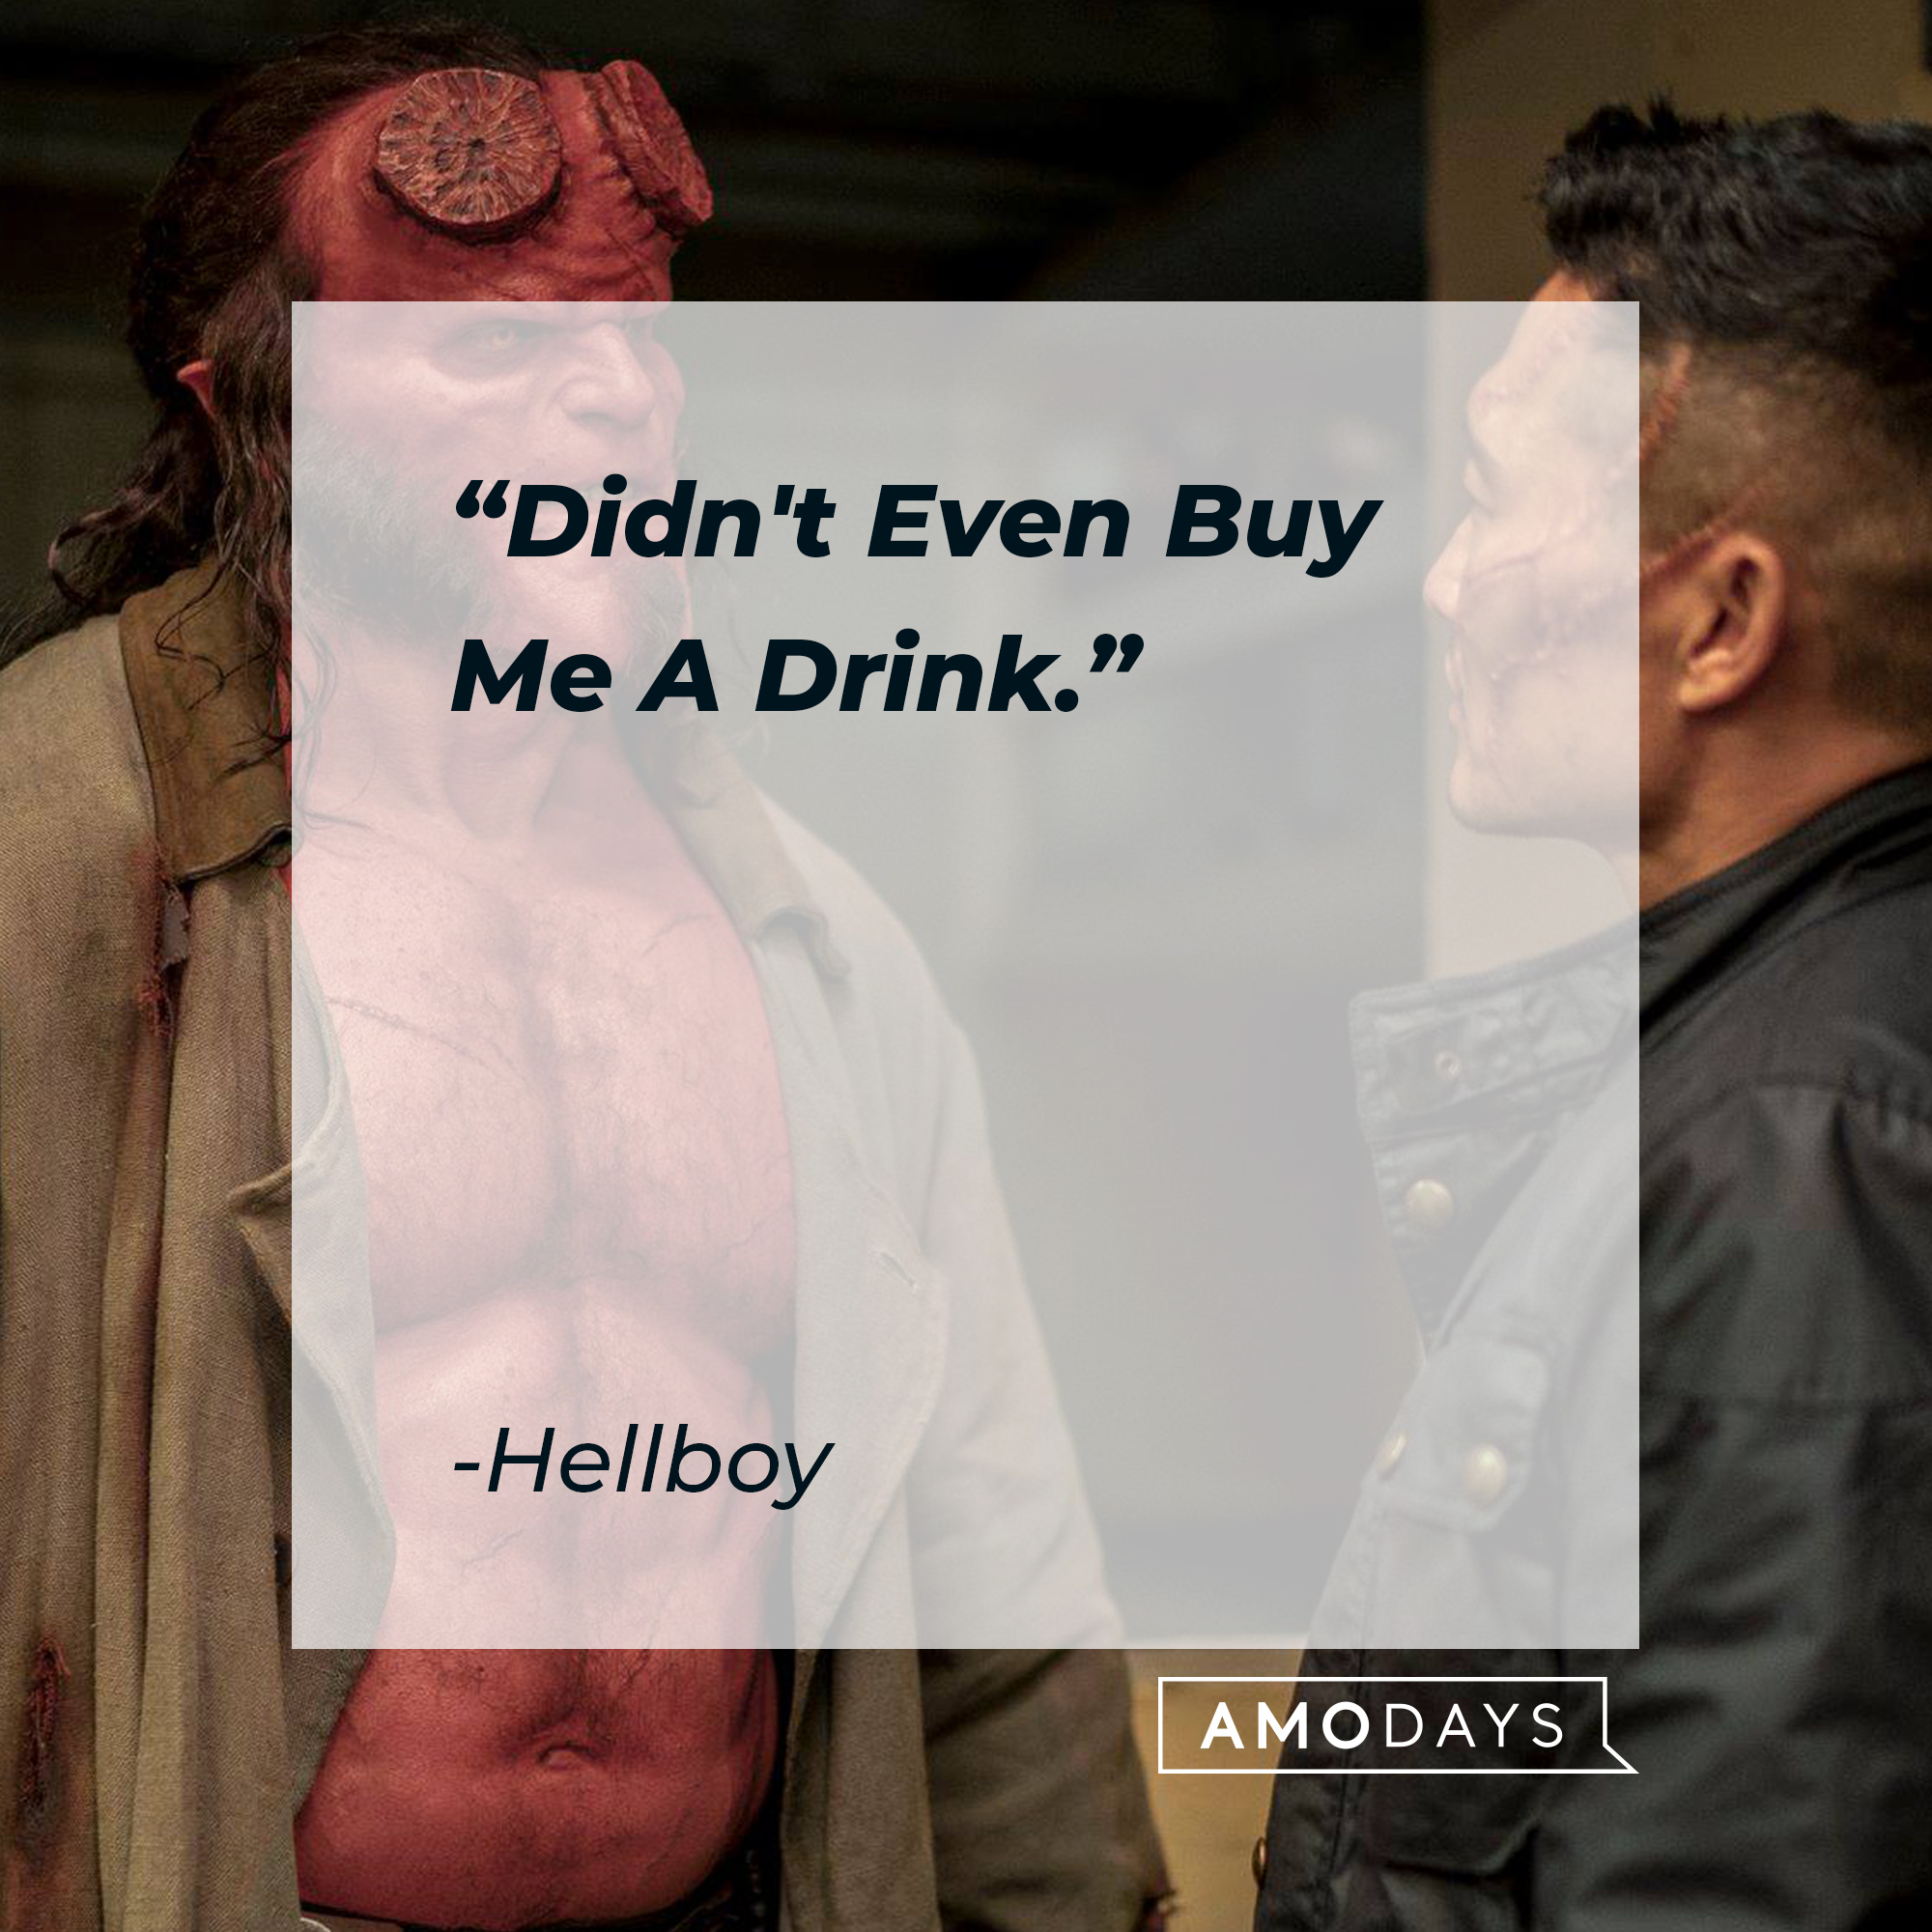 Hellboy's quote: "Didn't Even Buy Me A Drink." | Source: facebook.com/hellboymovie